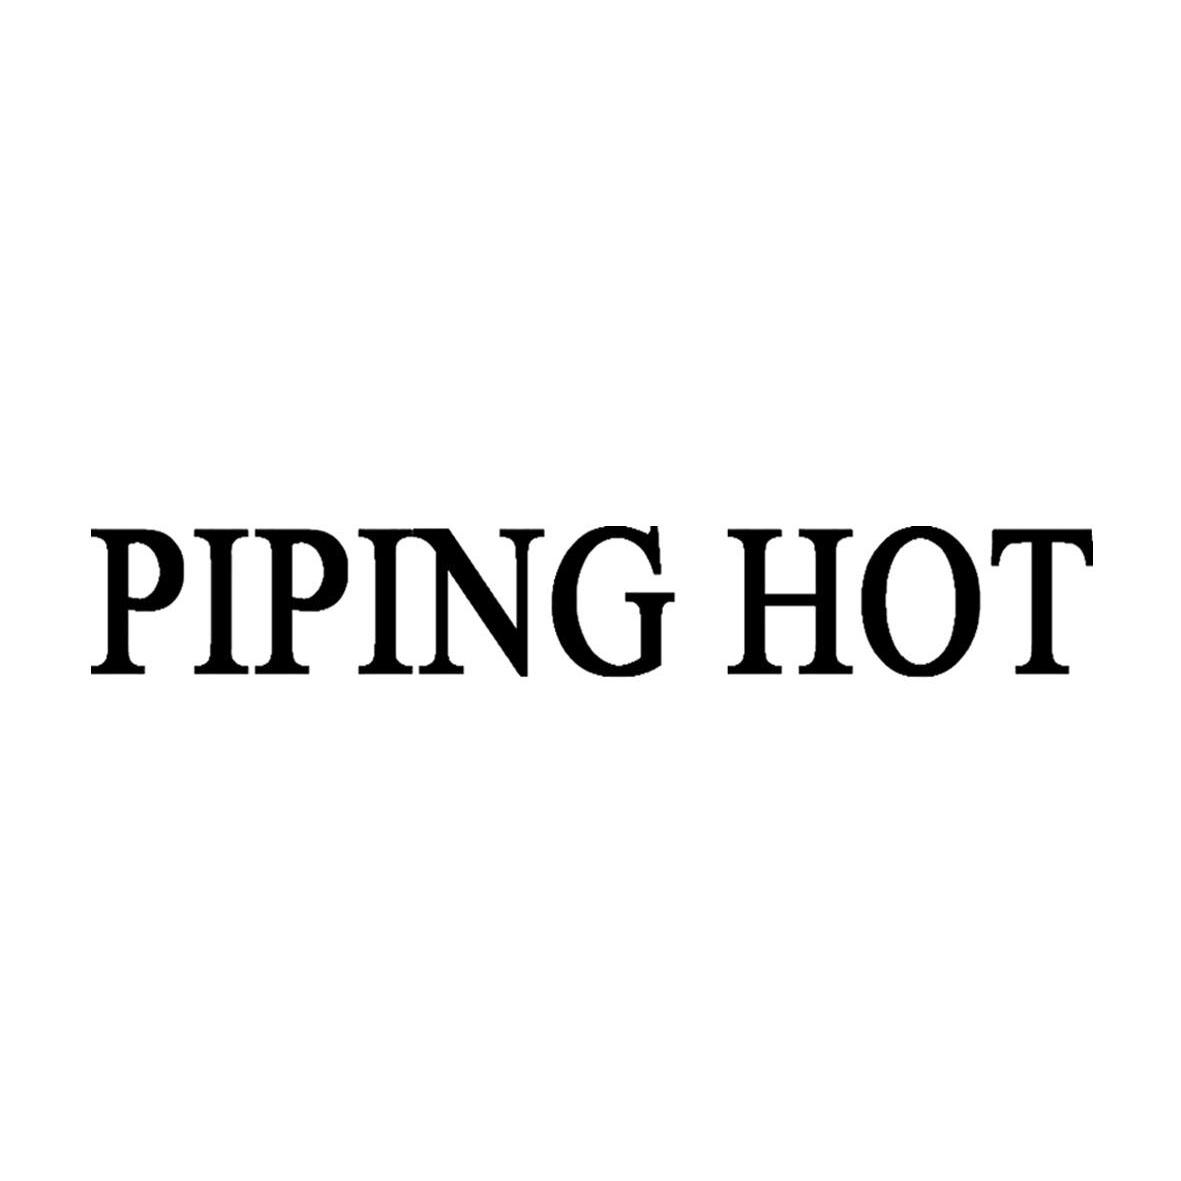 piping hot 商标公告